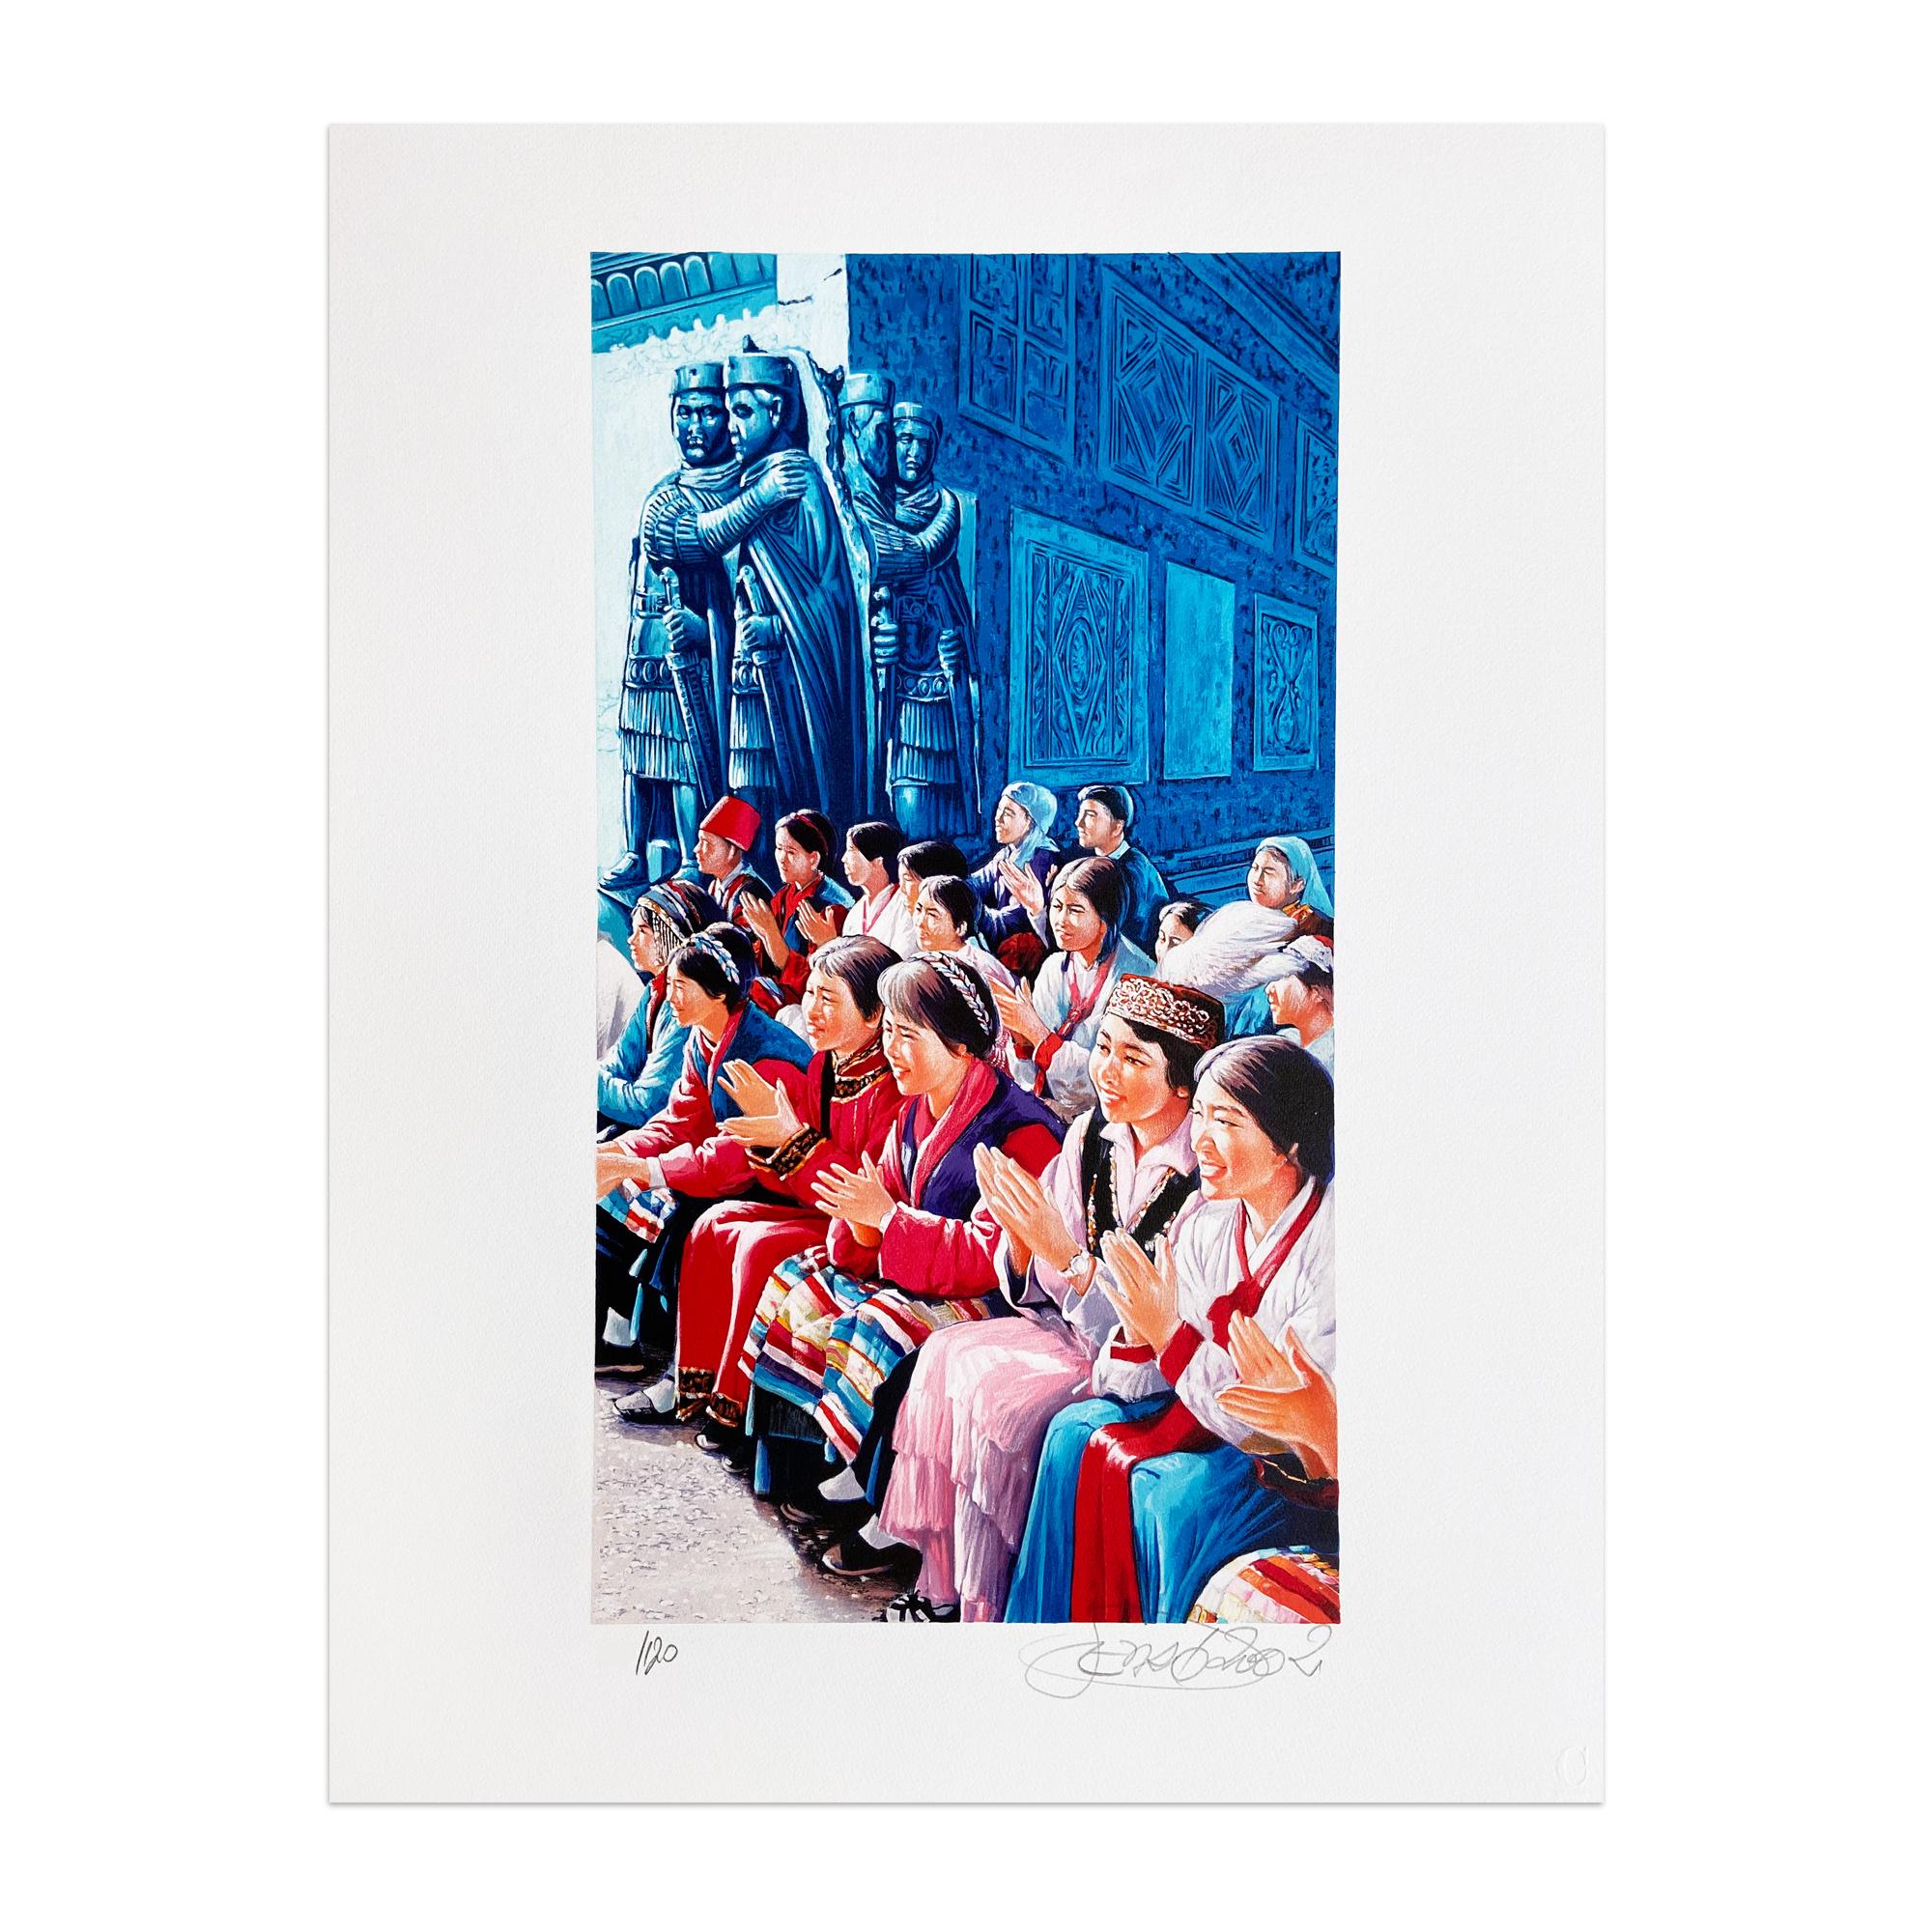 Erró, L'ultima visita di Mao a Venezia - Portfolio mit 12 signierten Drucken, Pop Art 3